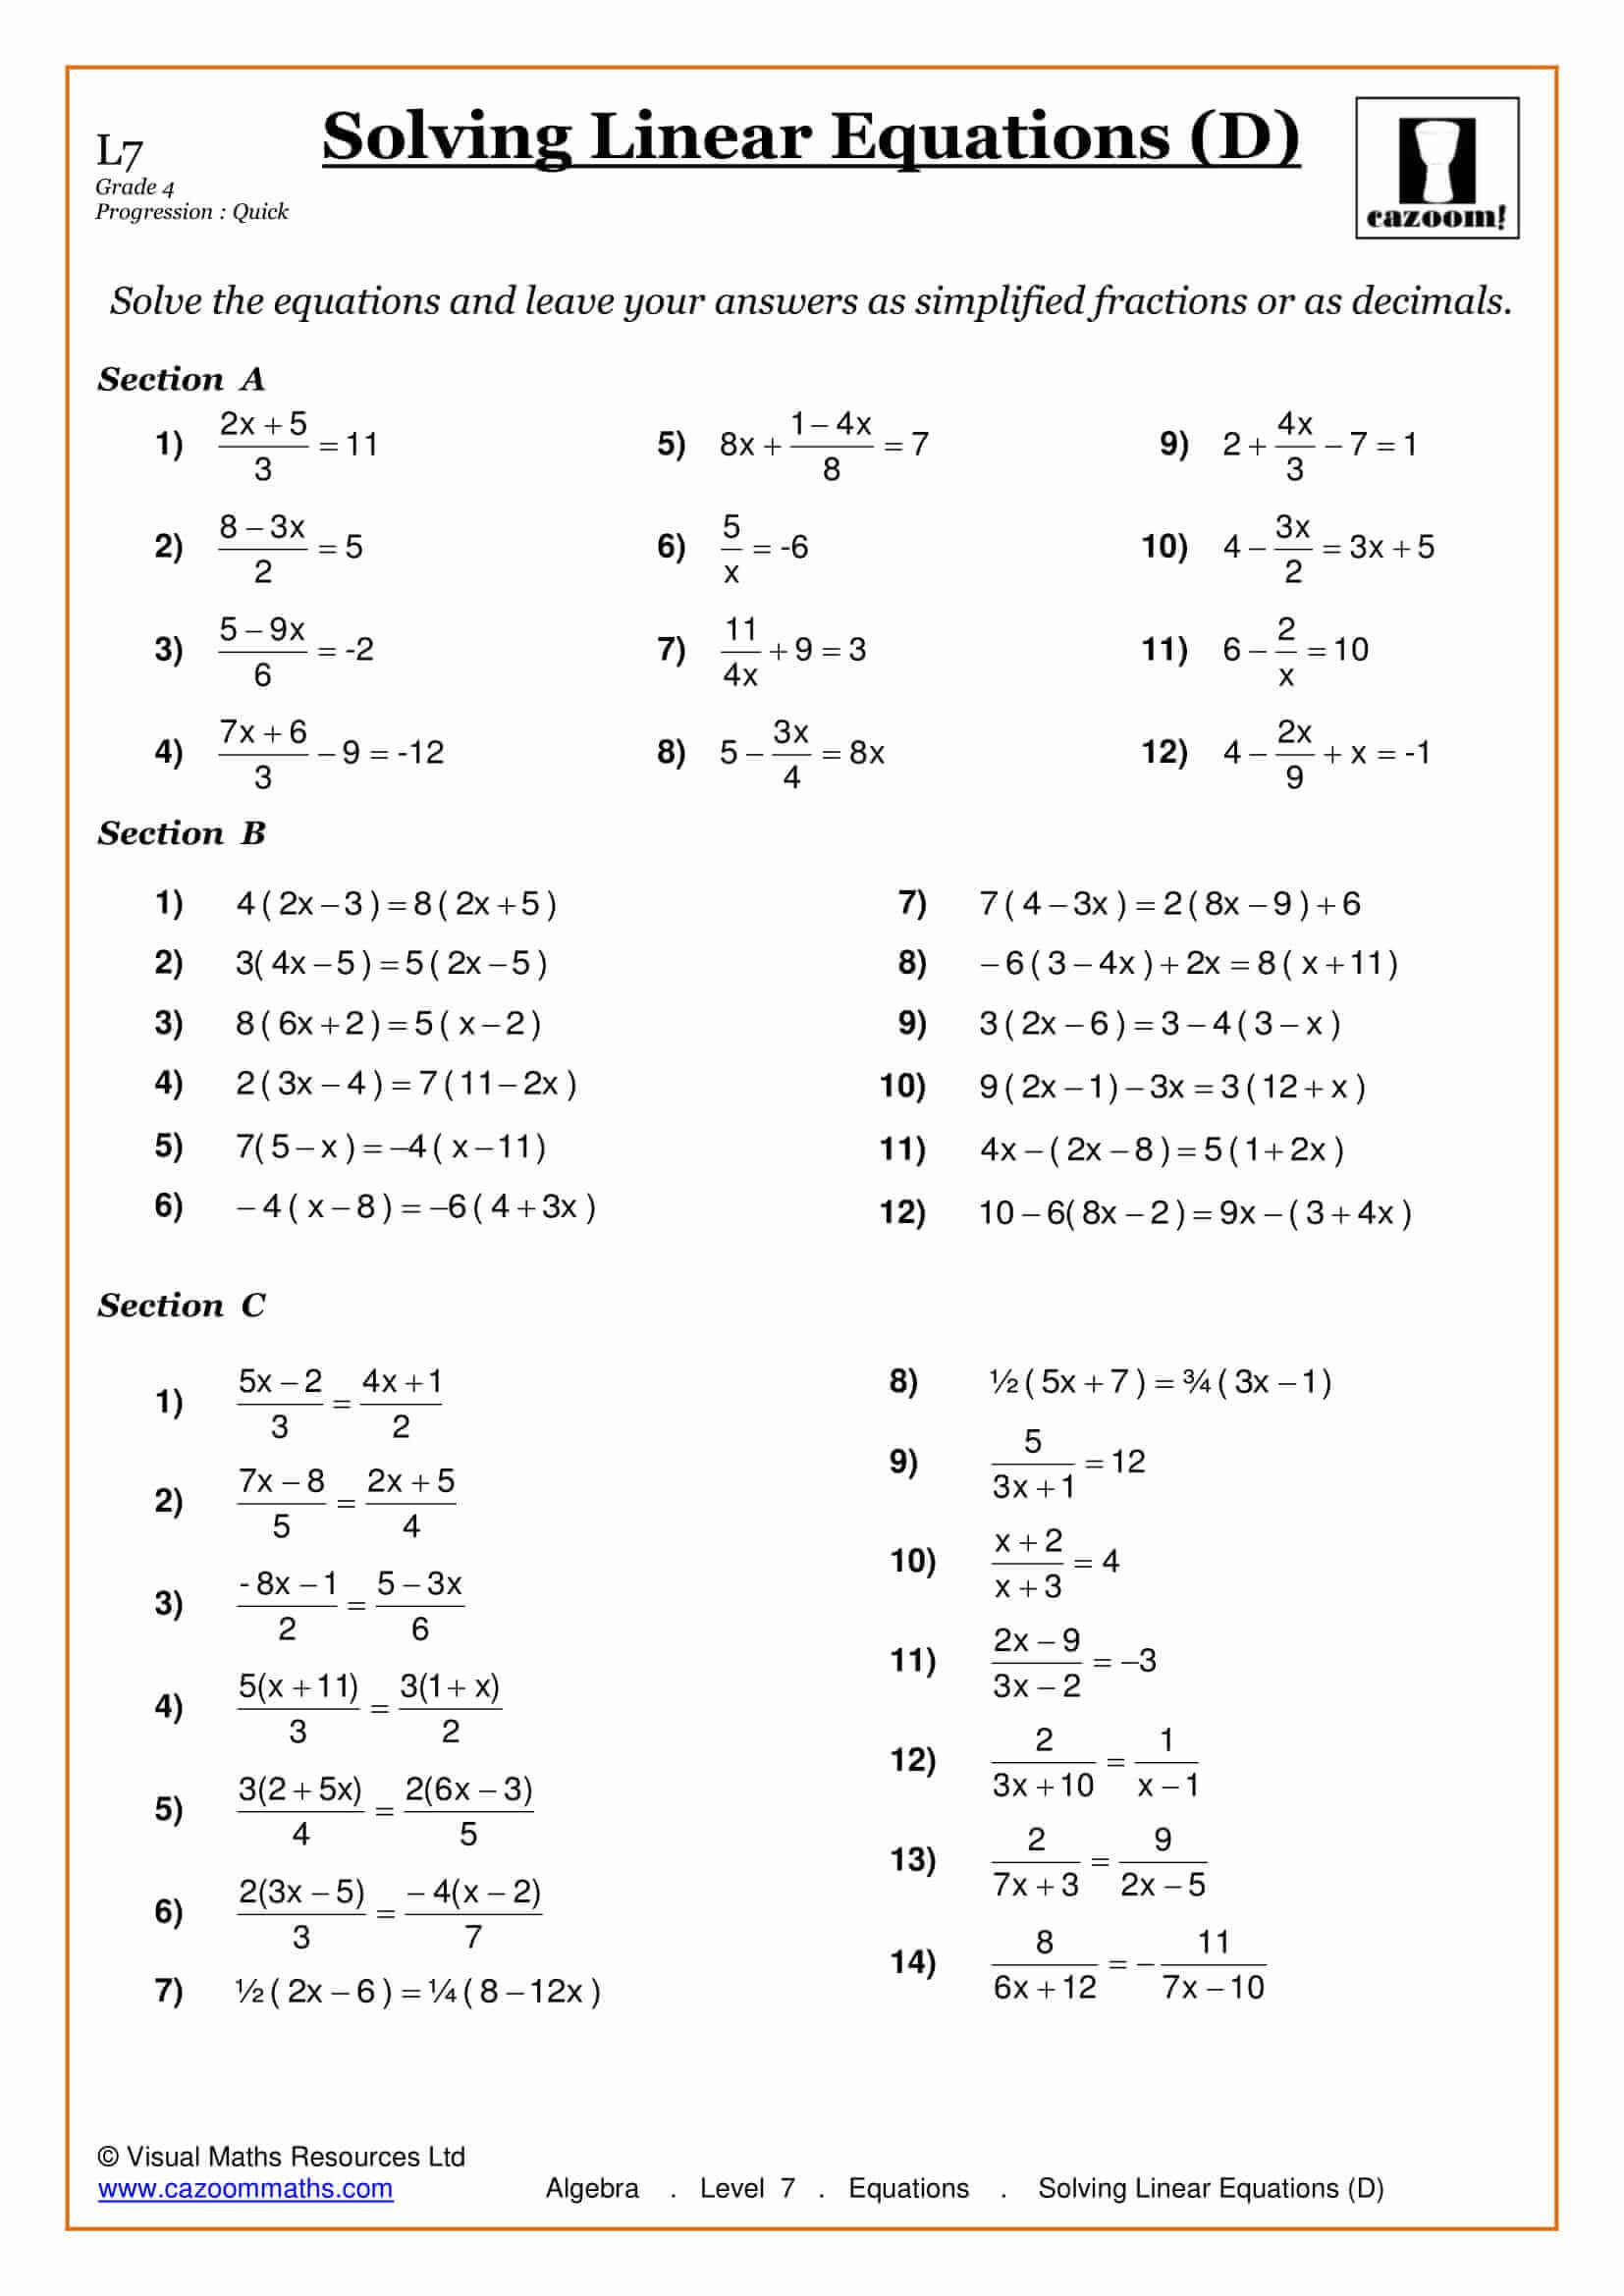 Writing Linear Equations Worksheet solving Equations Maths Worksheet